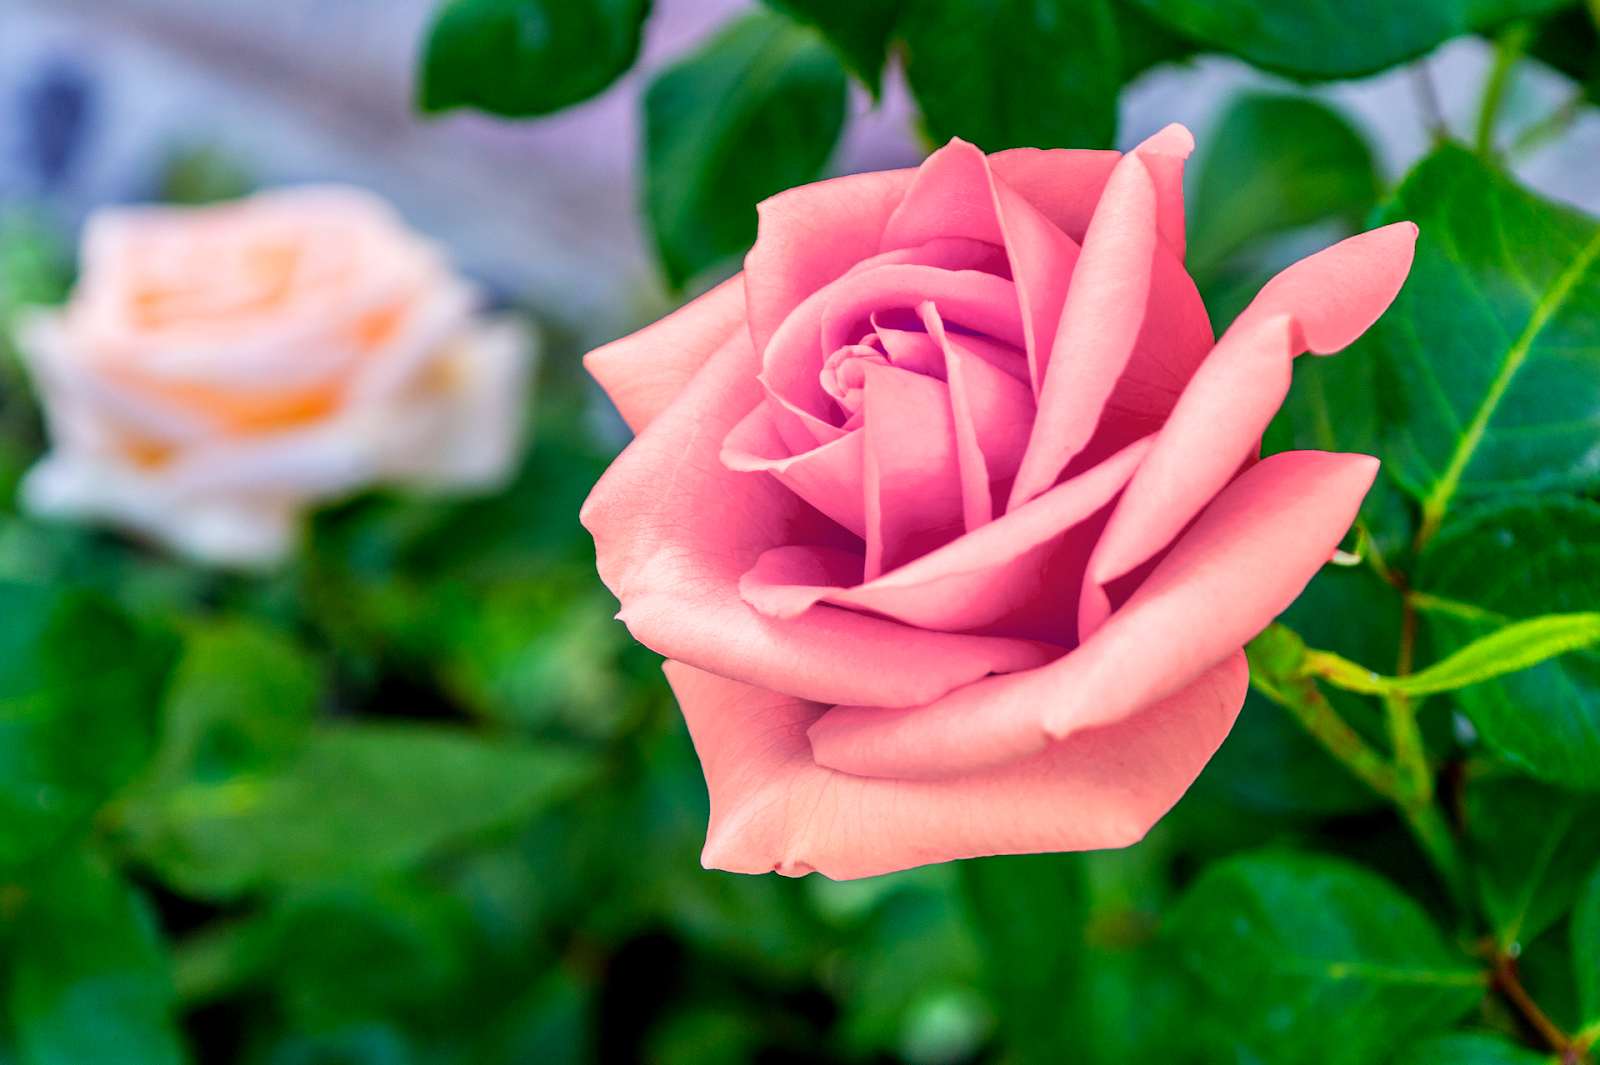 Kumpulan Galeri Gambar Bunga Mawar Pink Merah Muda Cantik Indah Terbaru Gambarcoloring